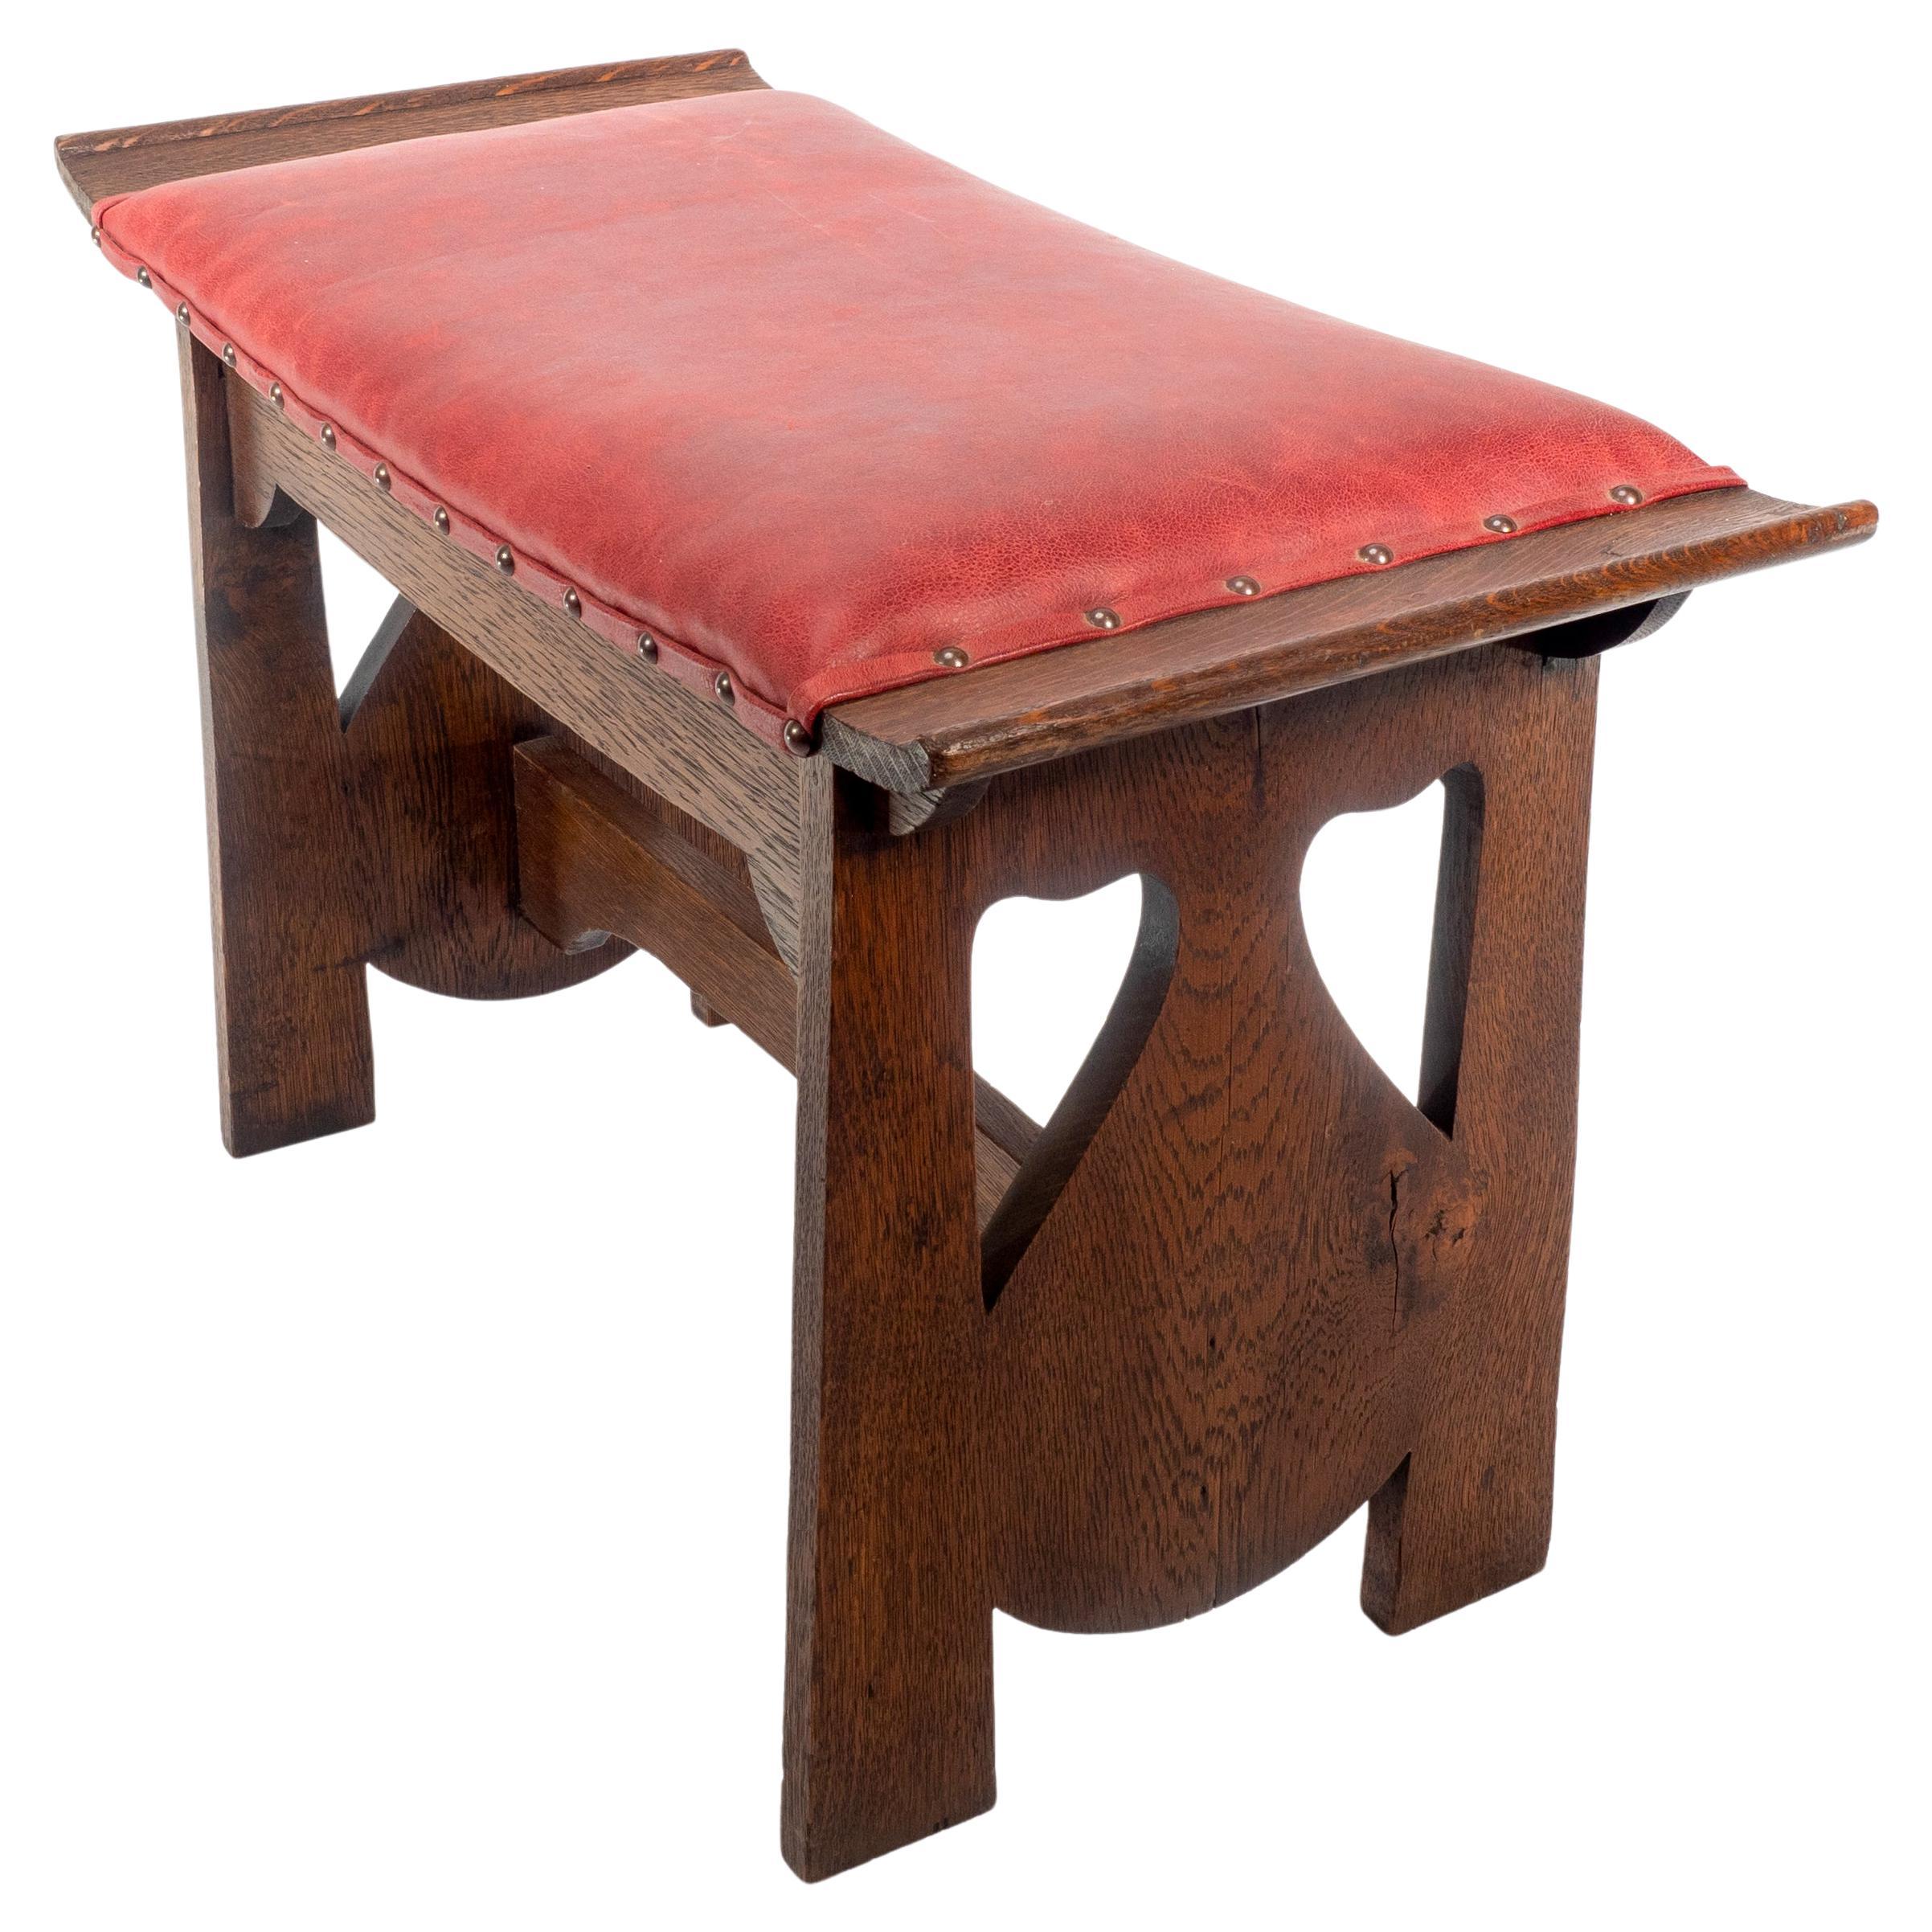 Glasgow School. George Logan attr An Arts & Crafts oak stool with upturned sides For Sale